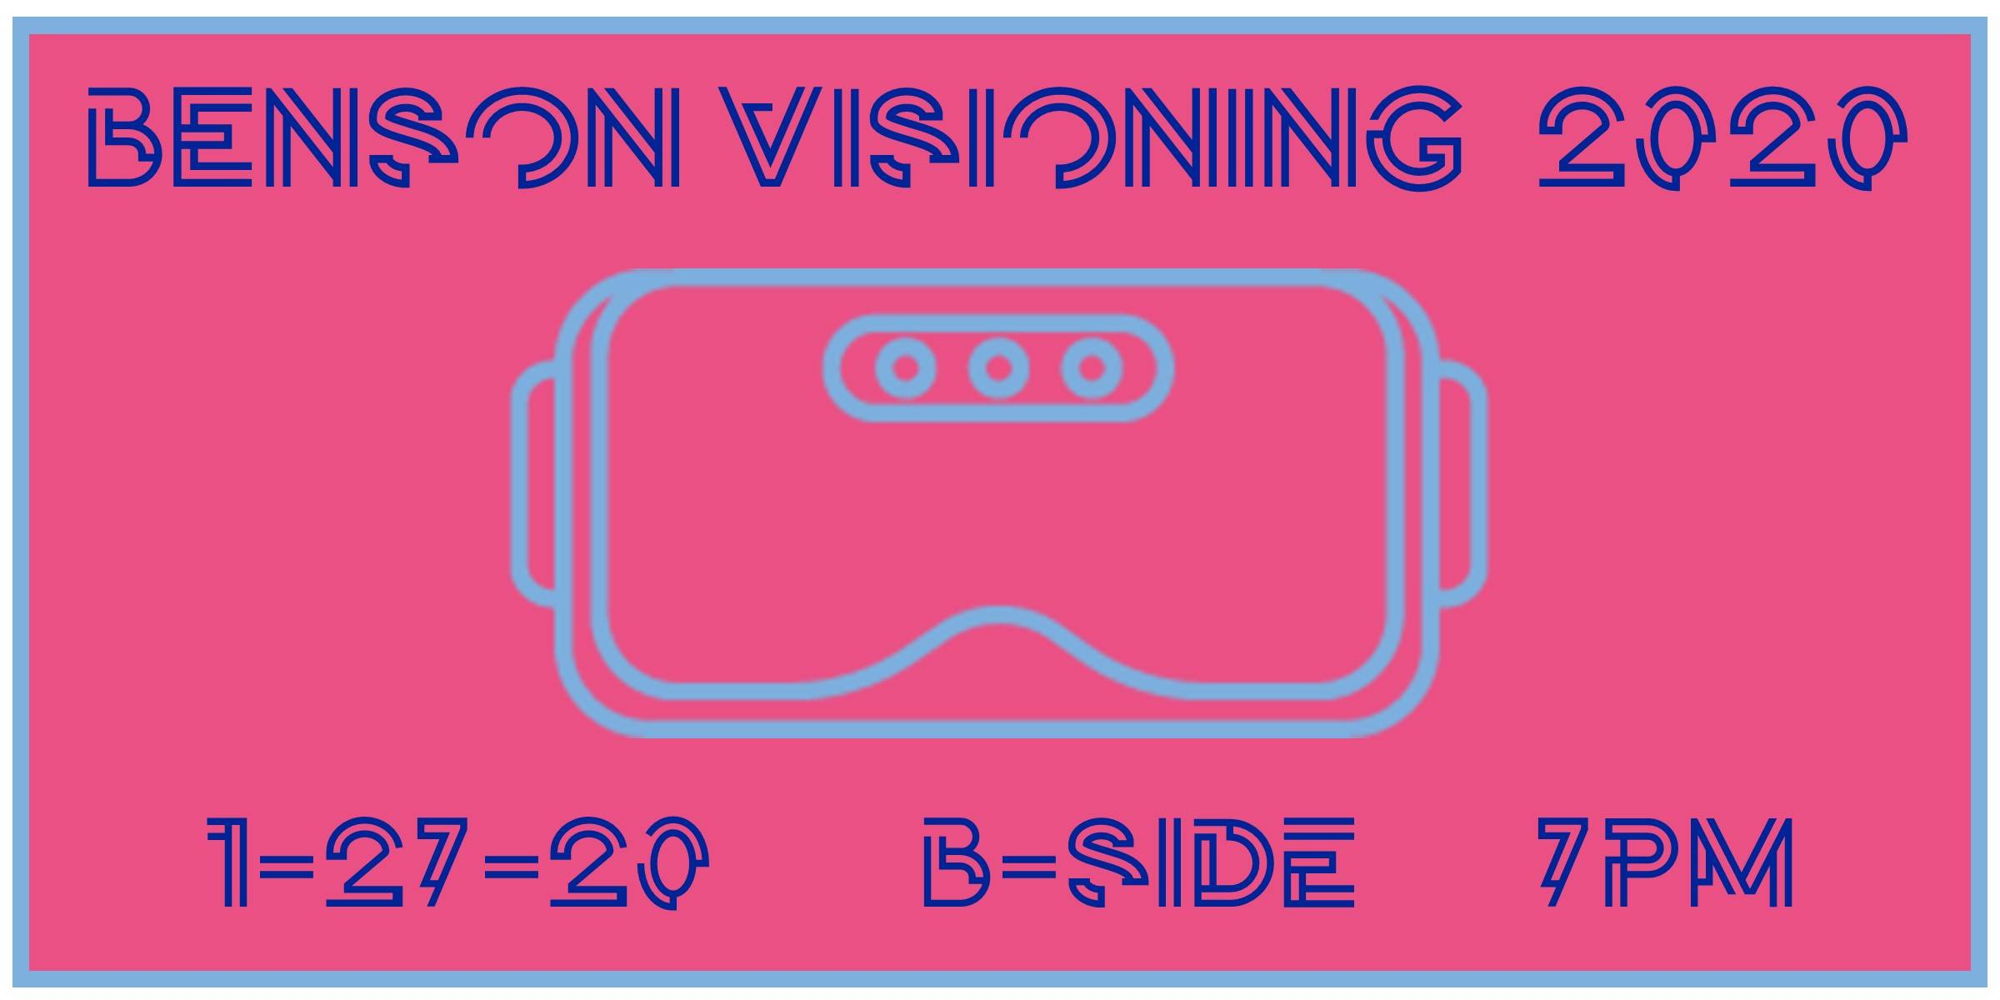 Benson Visioning 2020 promotional image